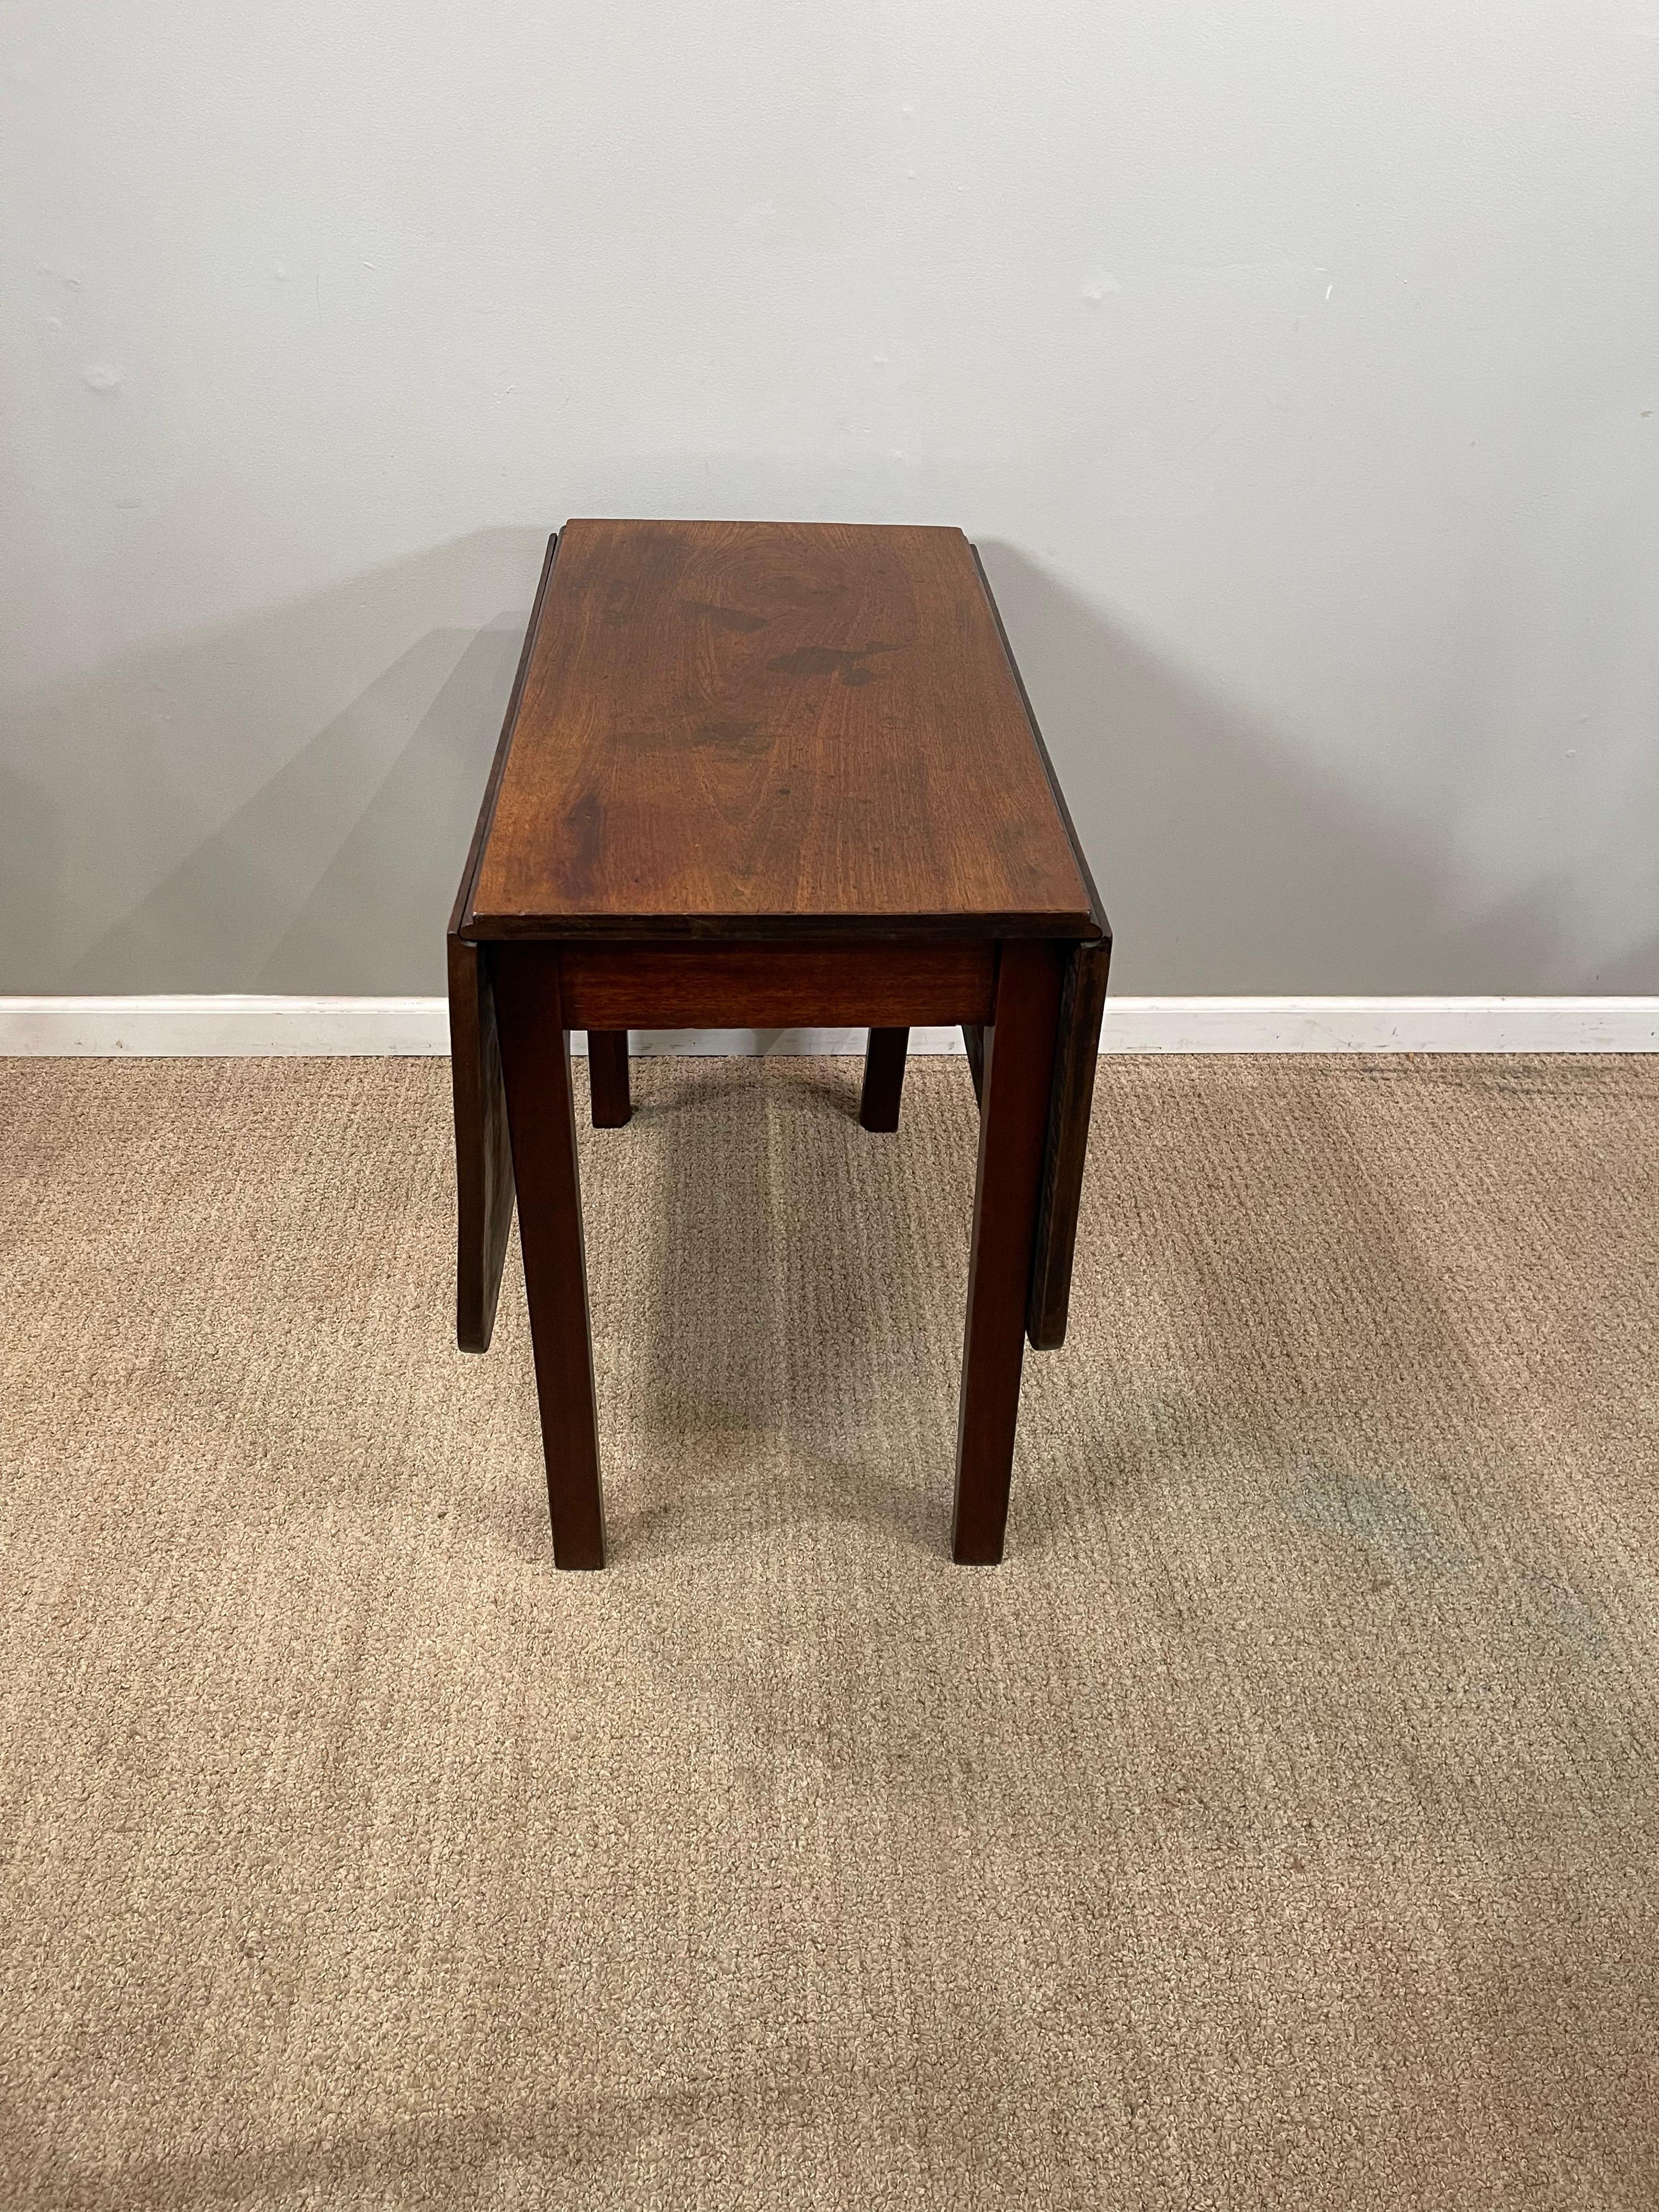 rectangular antique drop leaf table